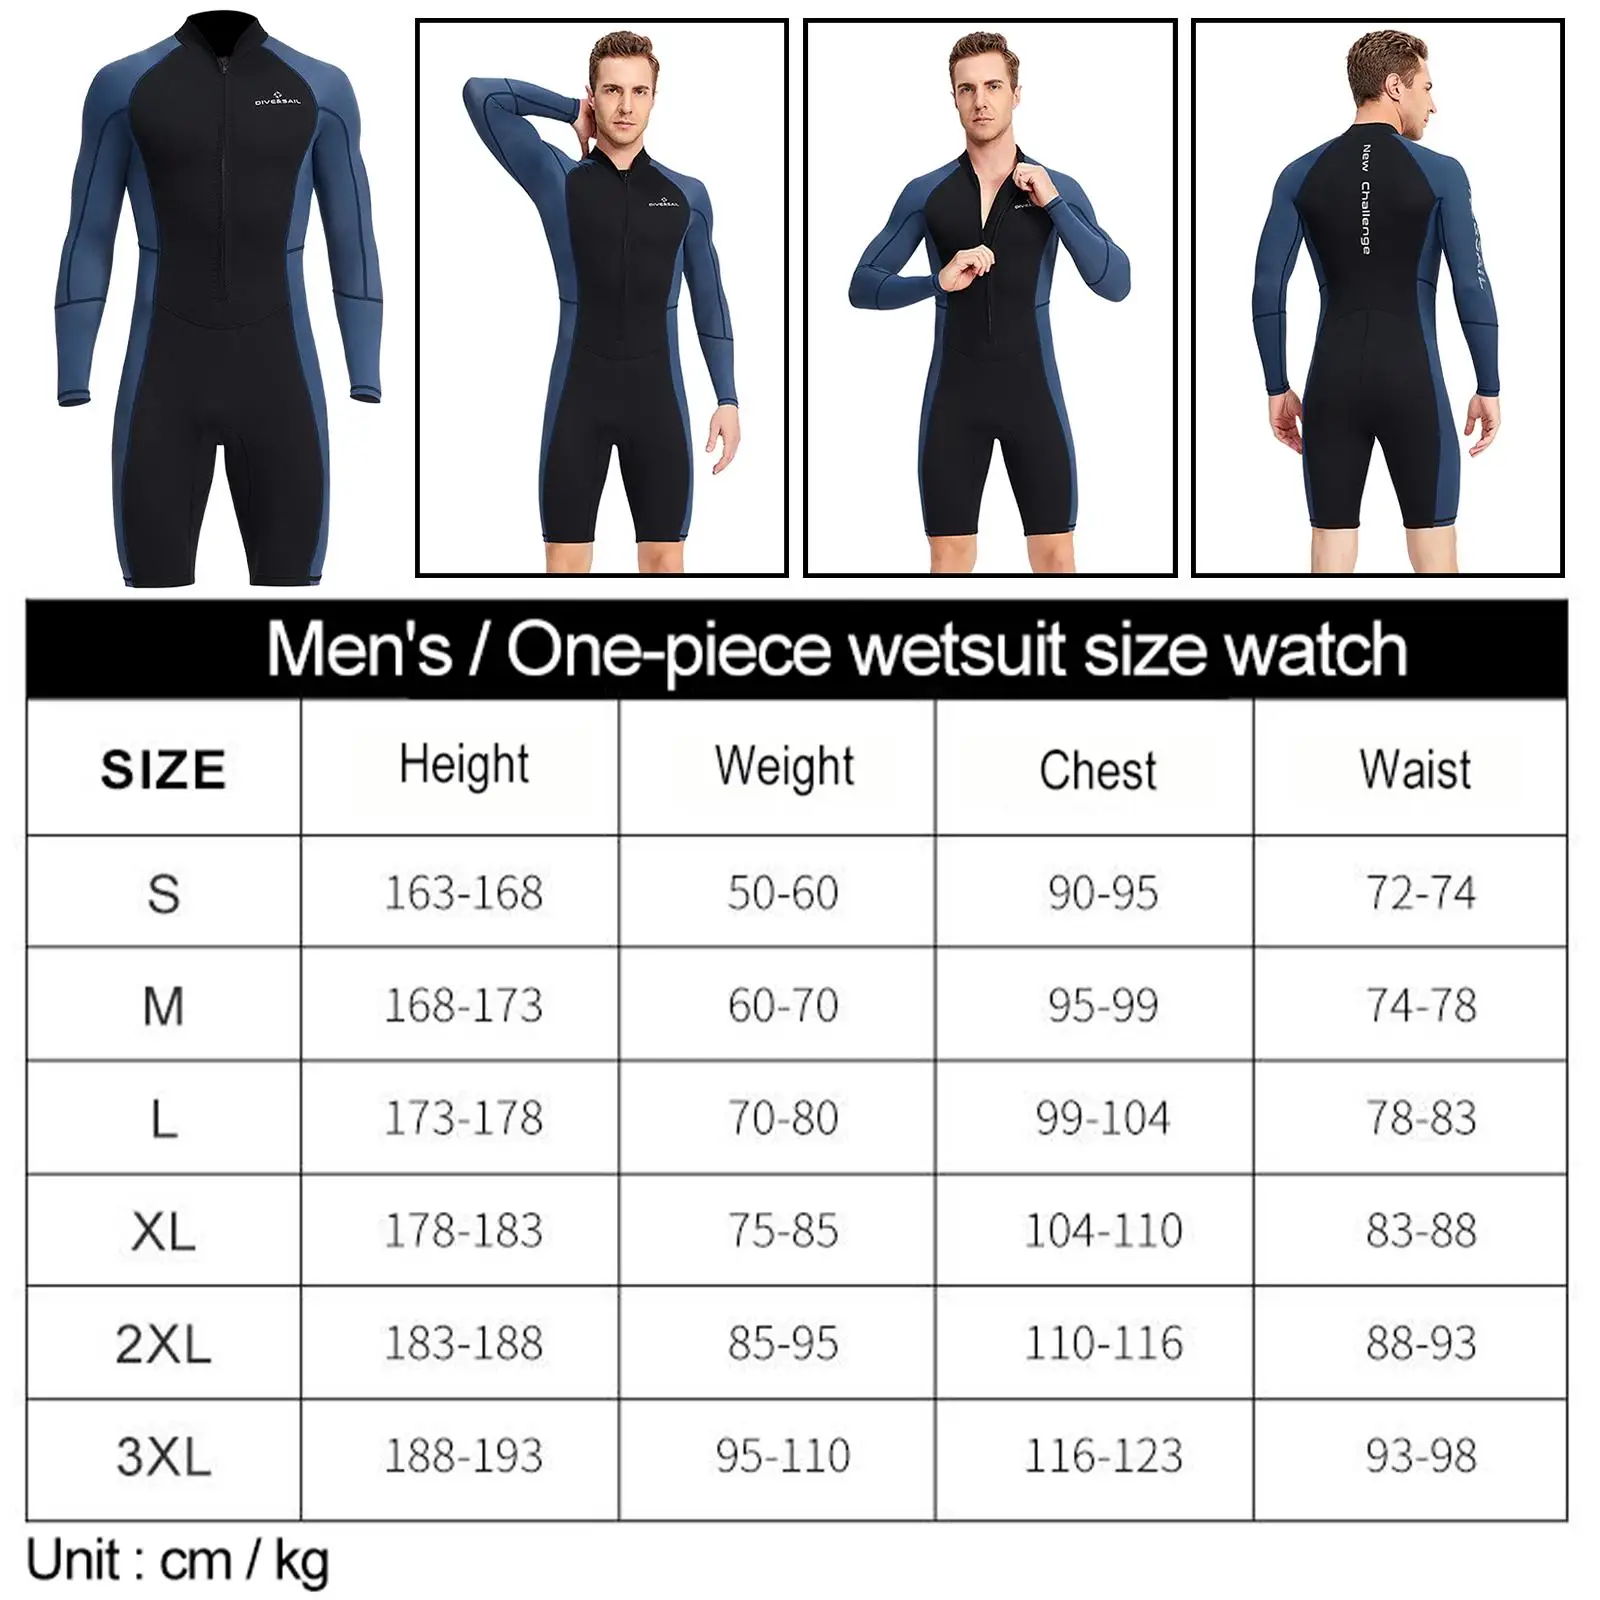 Neoprene 1.5mm Men Wetsuit Shorty Diving Suit Wet Suit for Diving